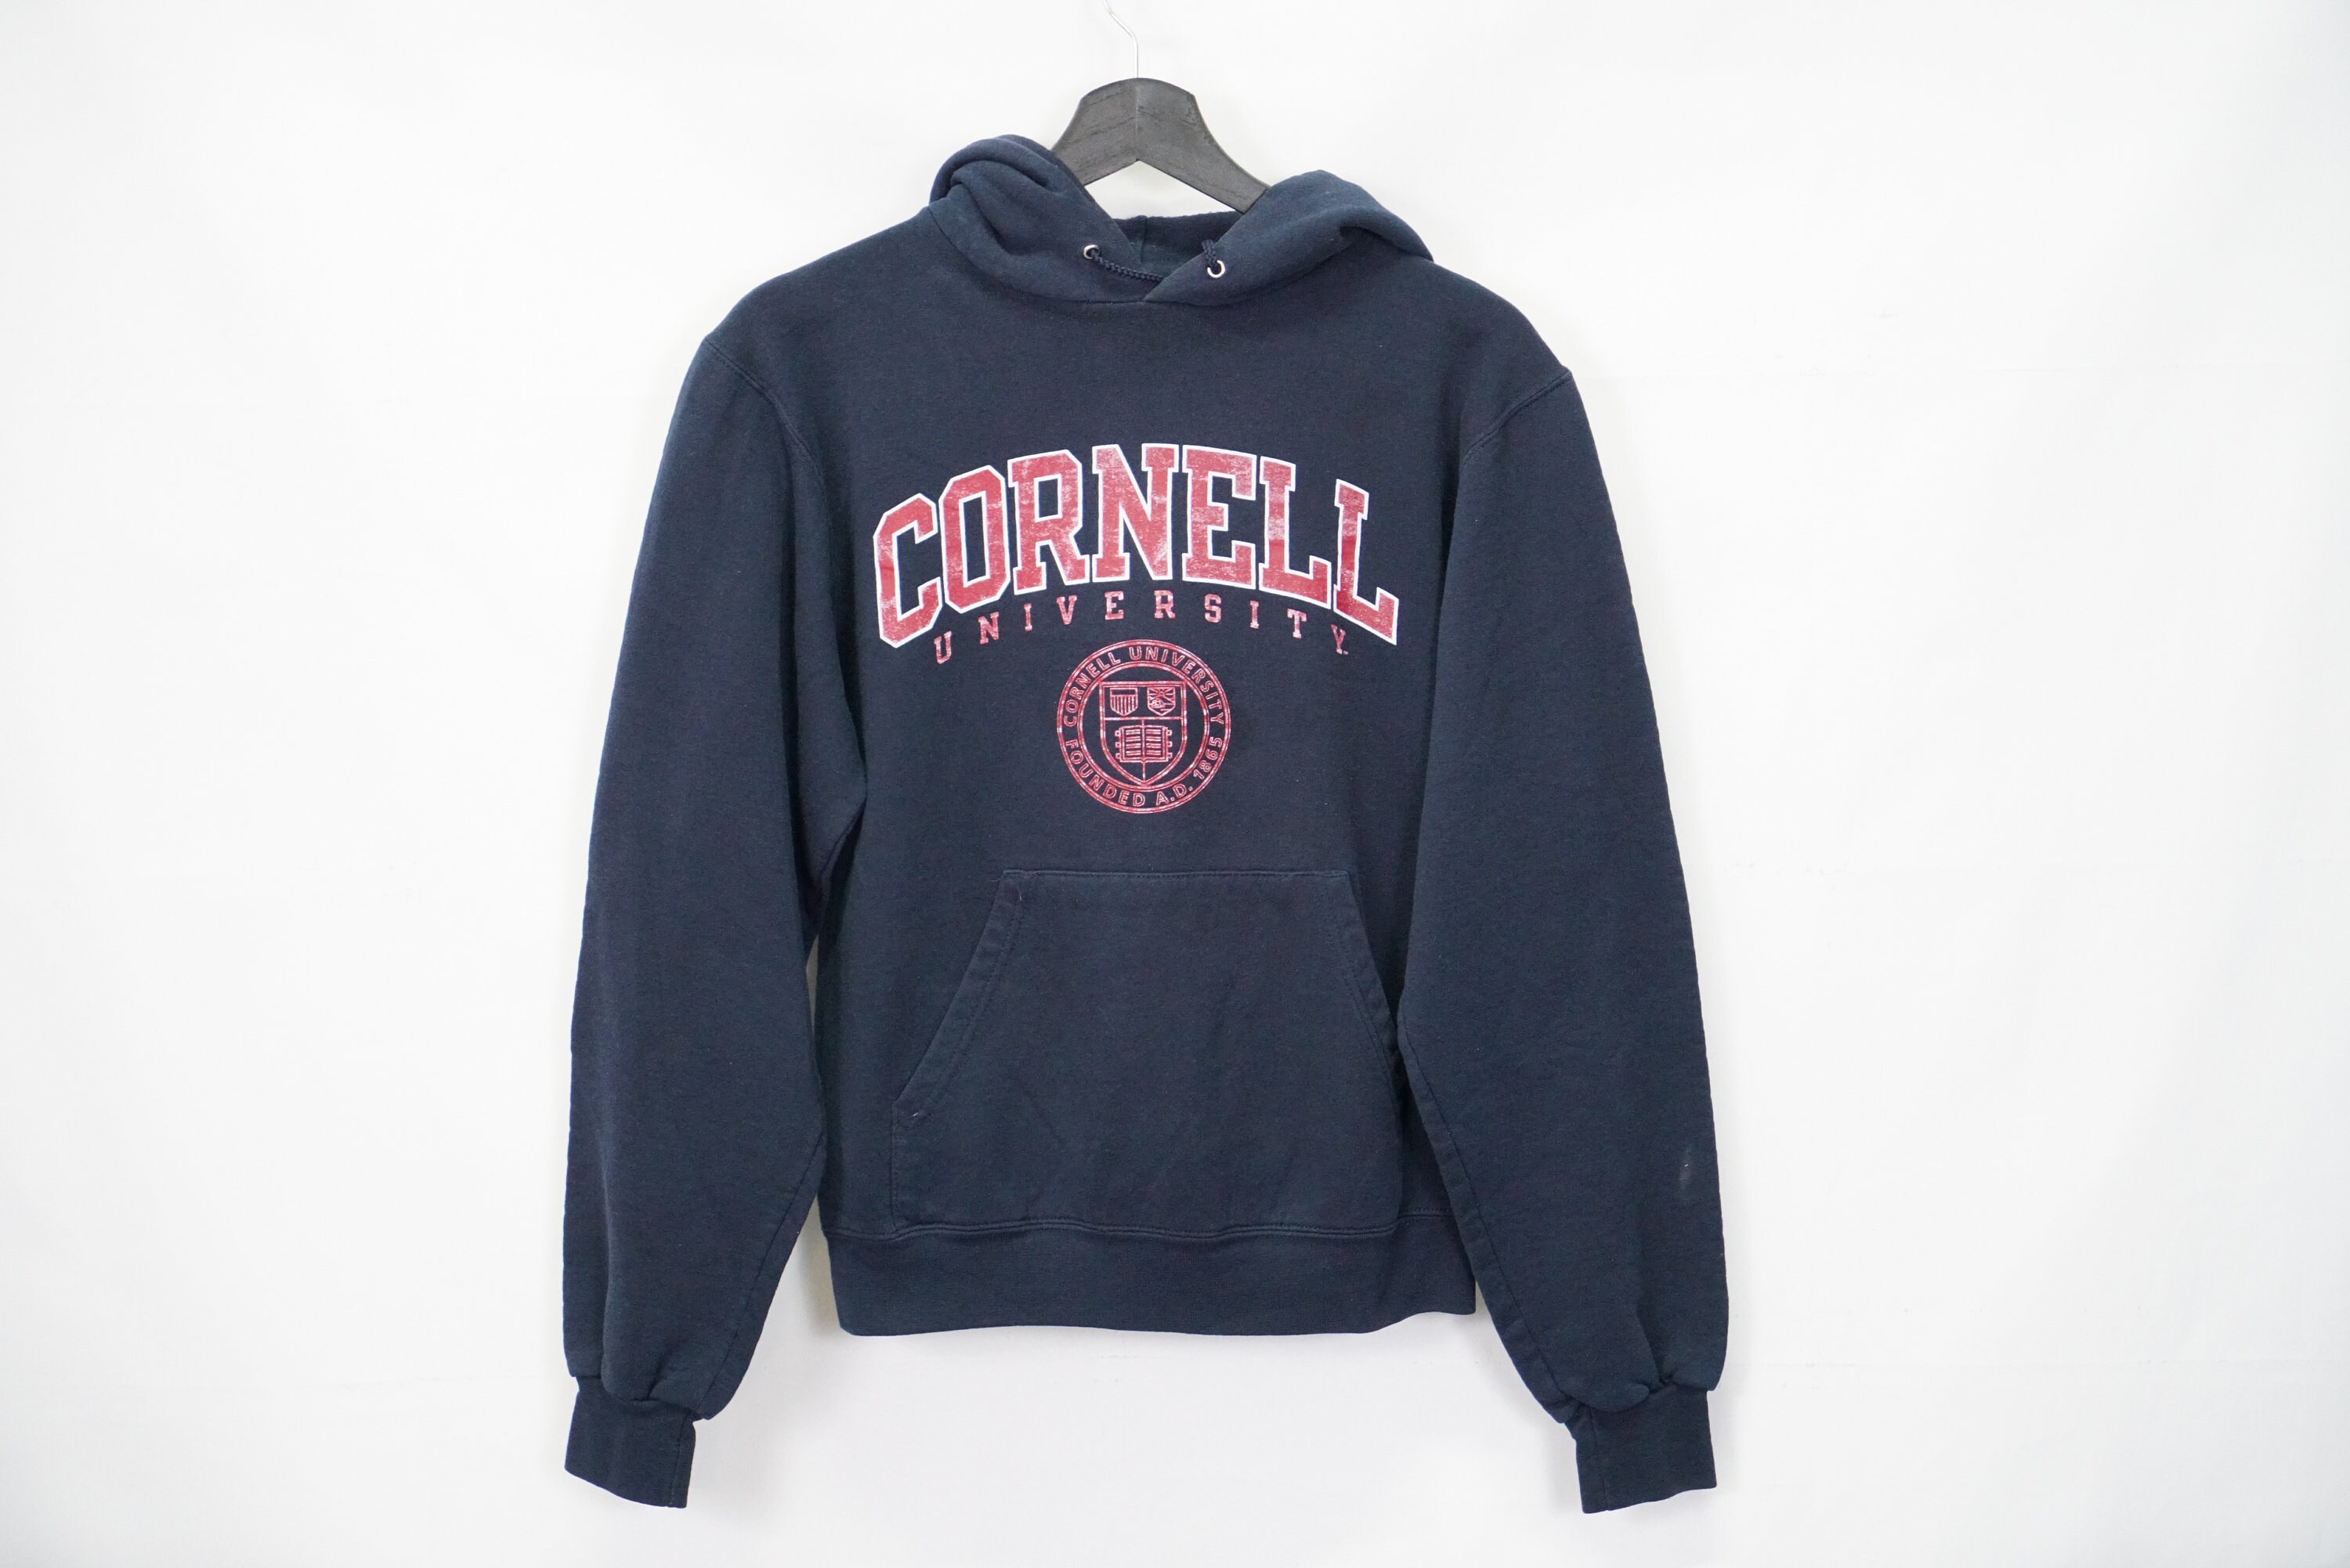 Cornell Kids Hoodies, Cornell Big Red Sweatshirts, Fleece